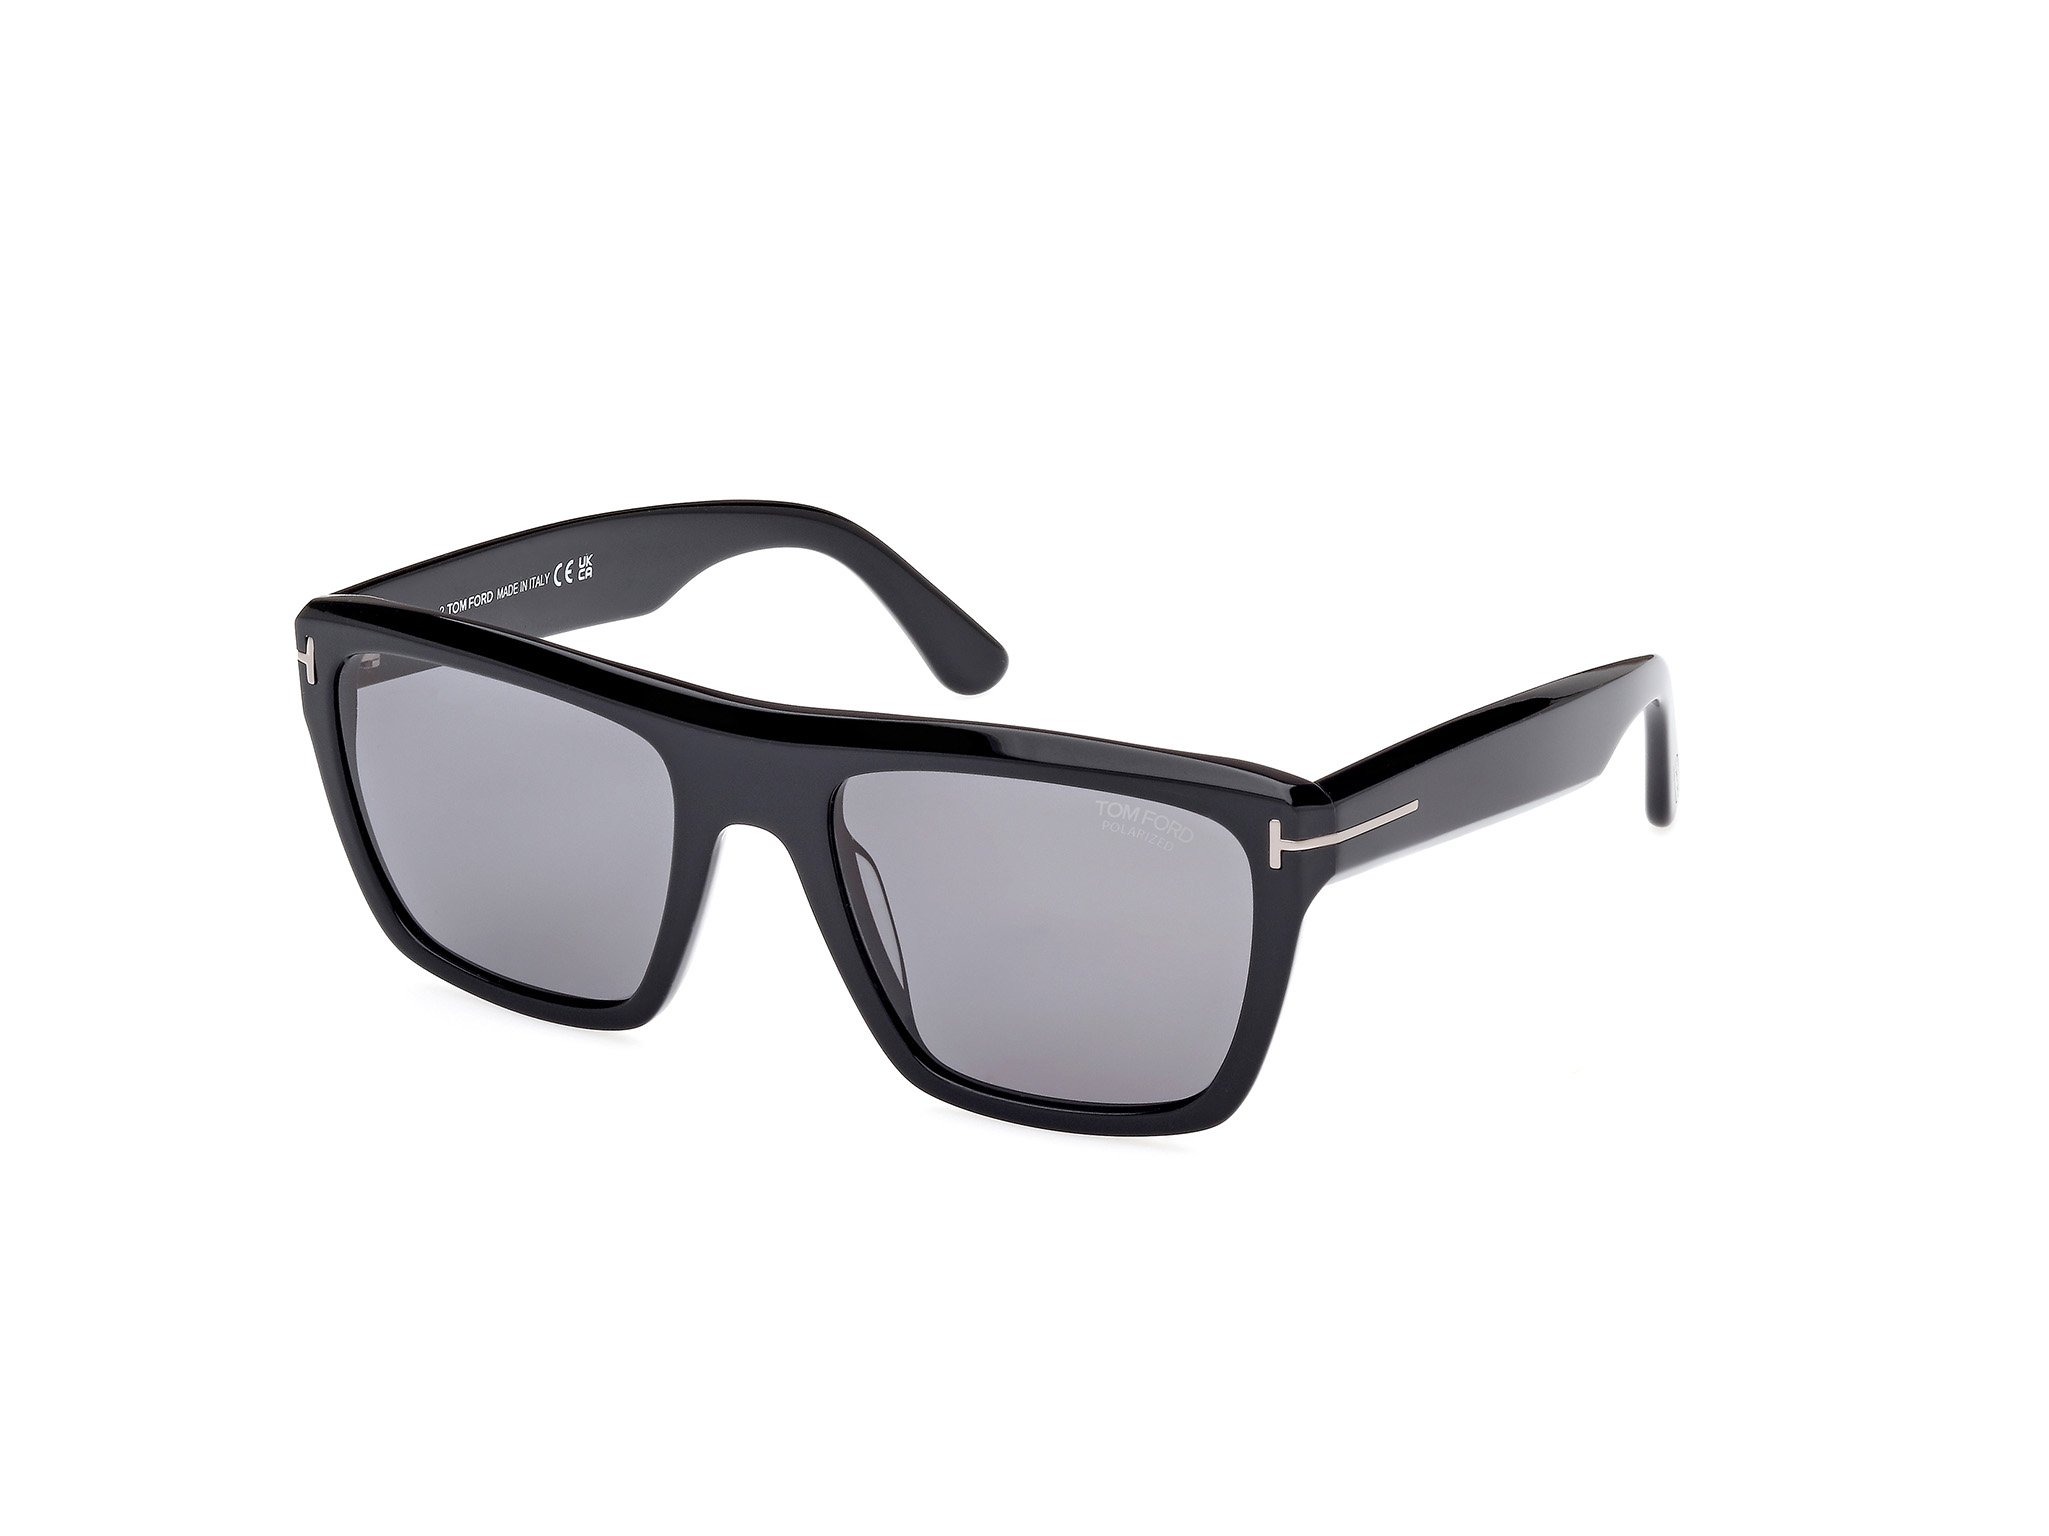  Tom Ford Sonnenbrille Alberto in schwarz FT1077-N 01D